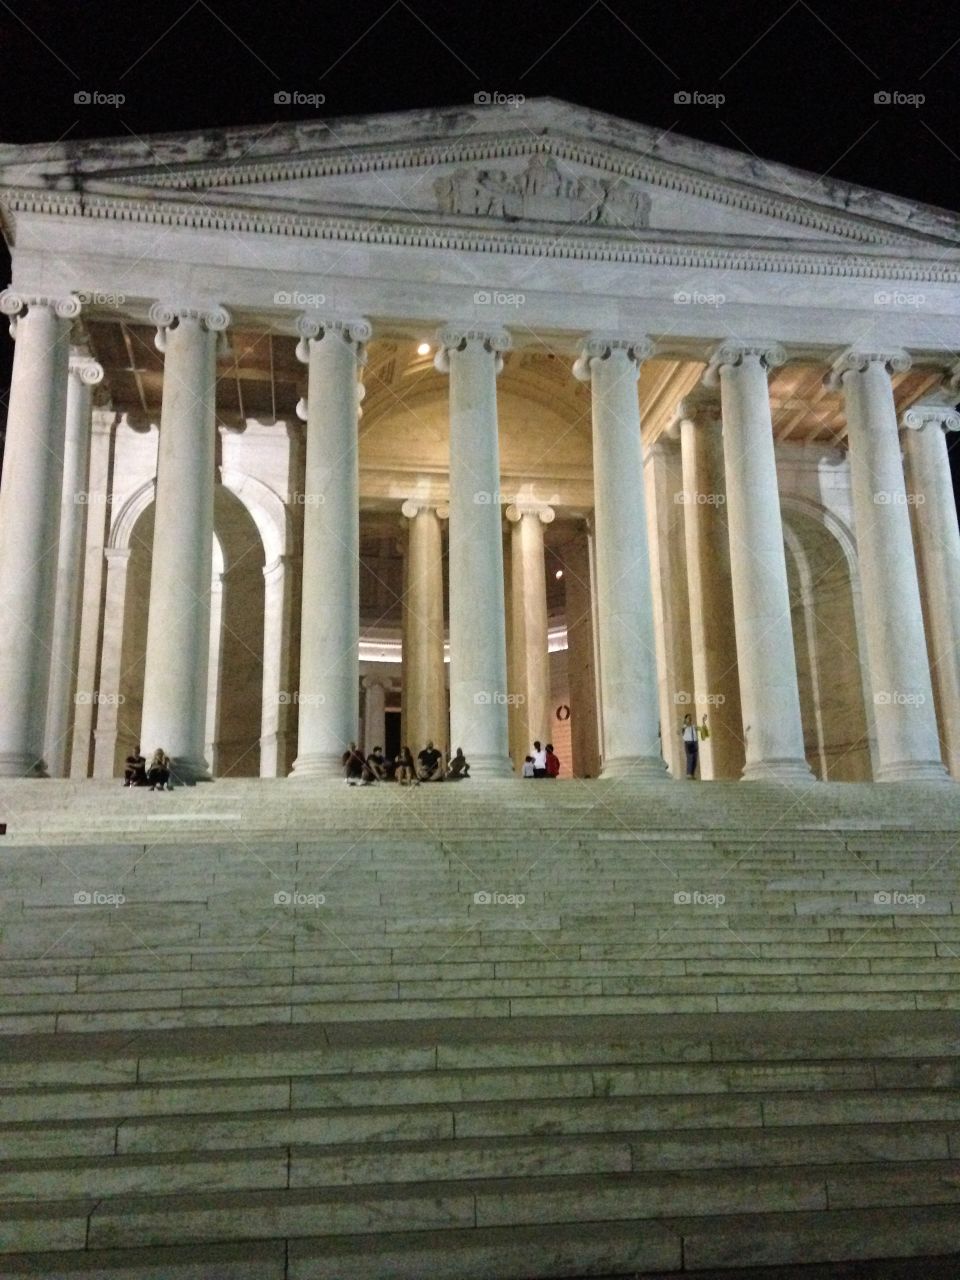 Jefferson memorial at night 